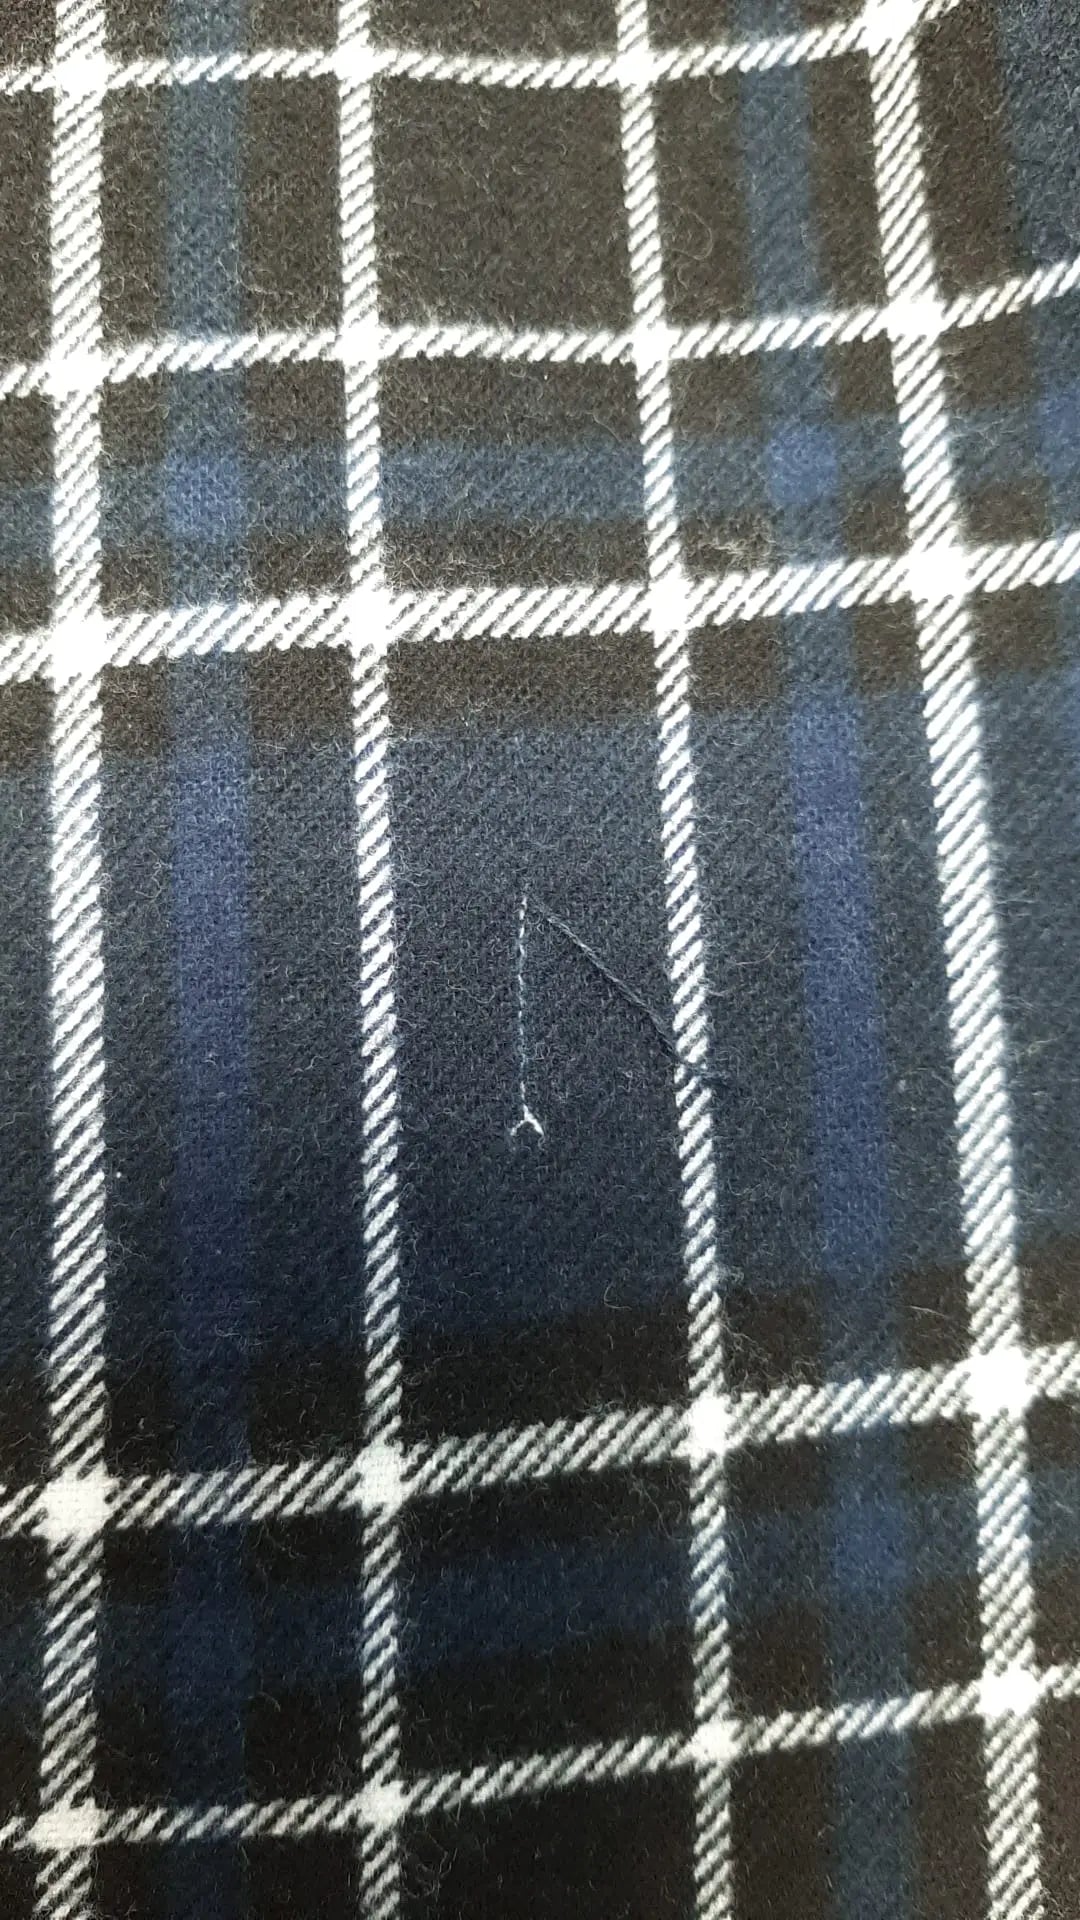 Portonova - Checkered Flannel Shirt- ThriftTale.com - Vintage and second handclothing